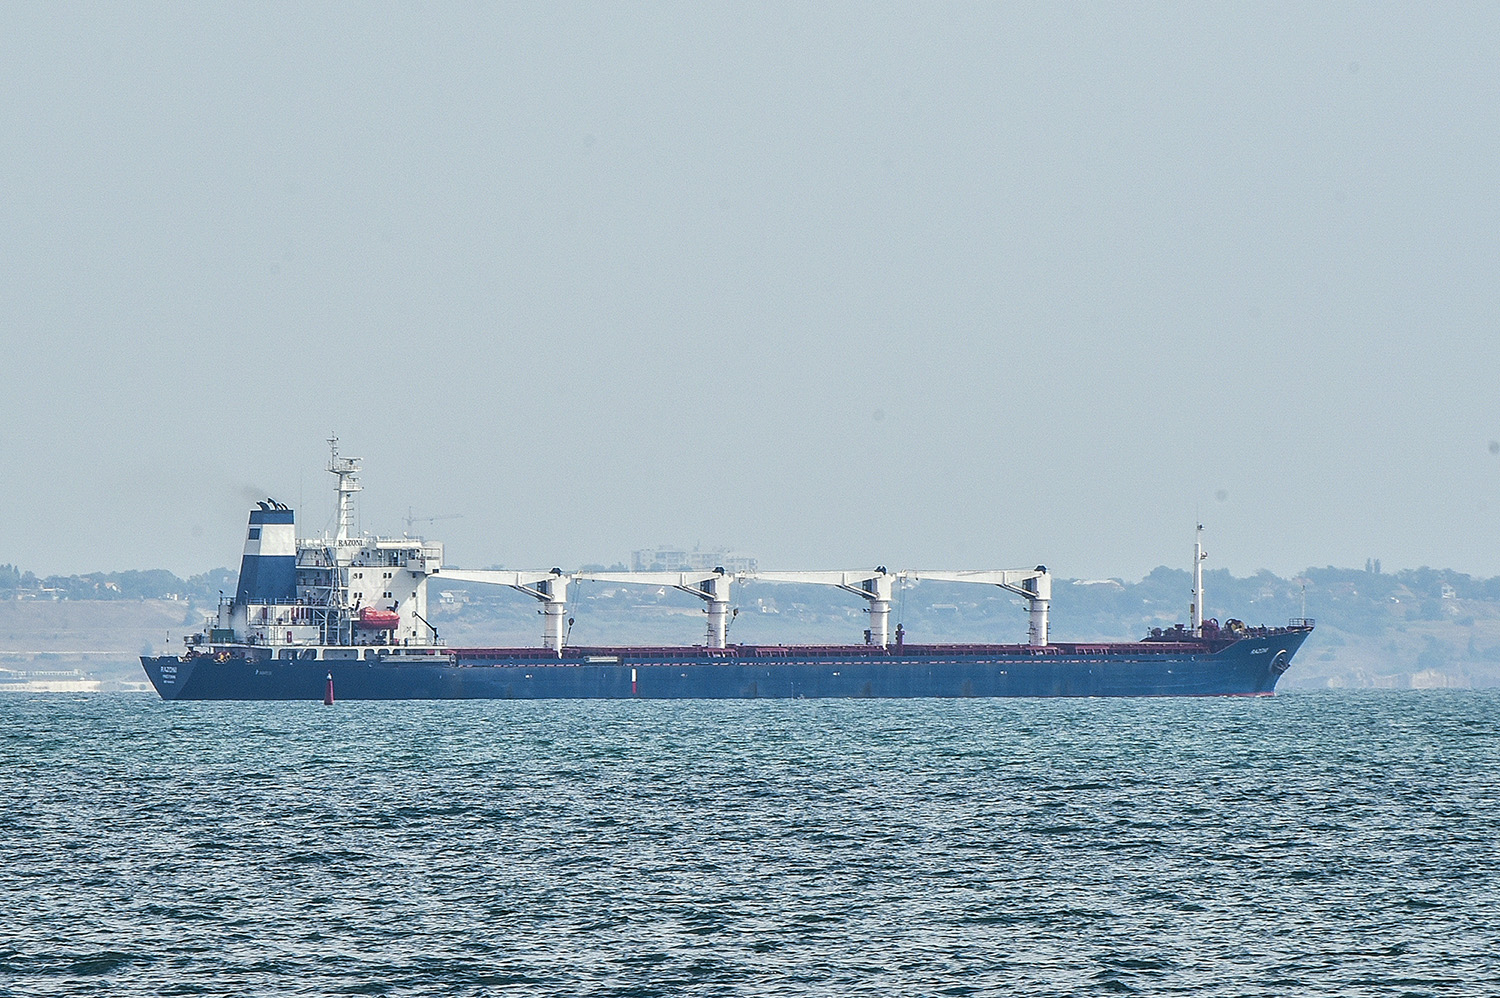 Sierra Leone-flagged dry cargo ship Razoni departs from port of Odesa in Odesa, Ukraine, on August 1.